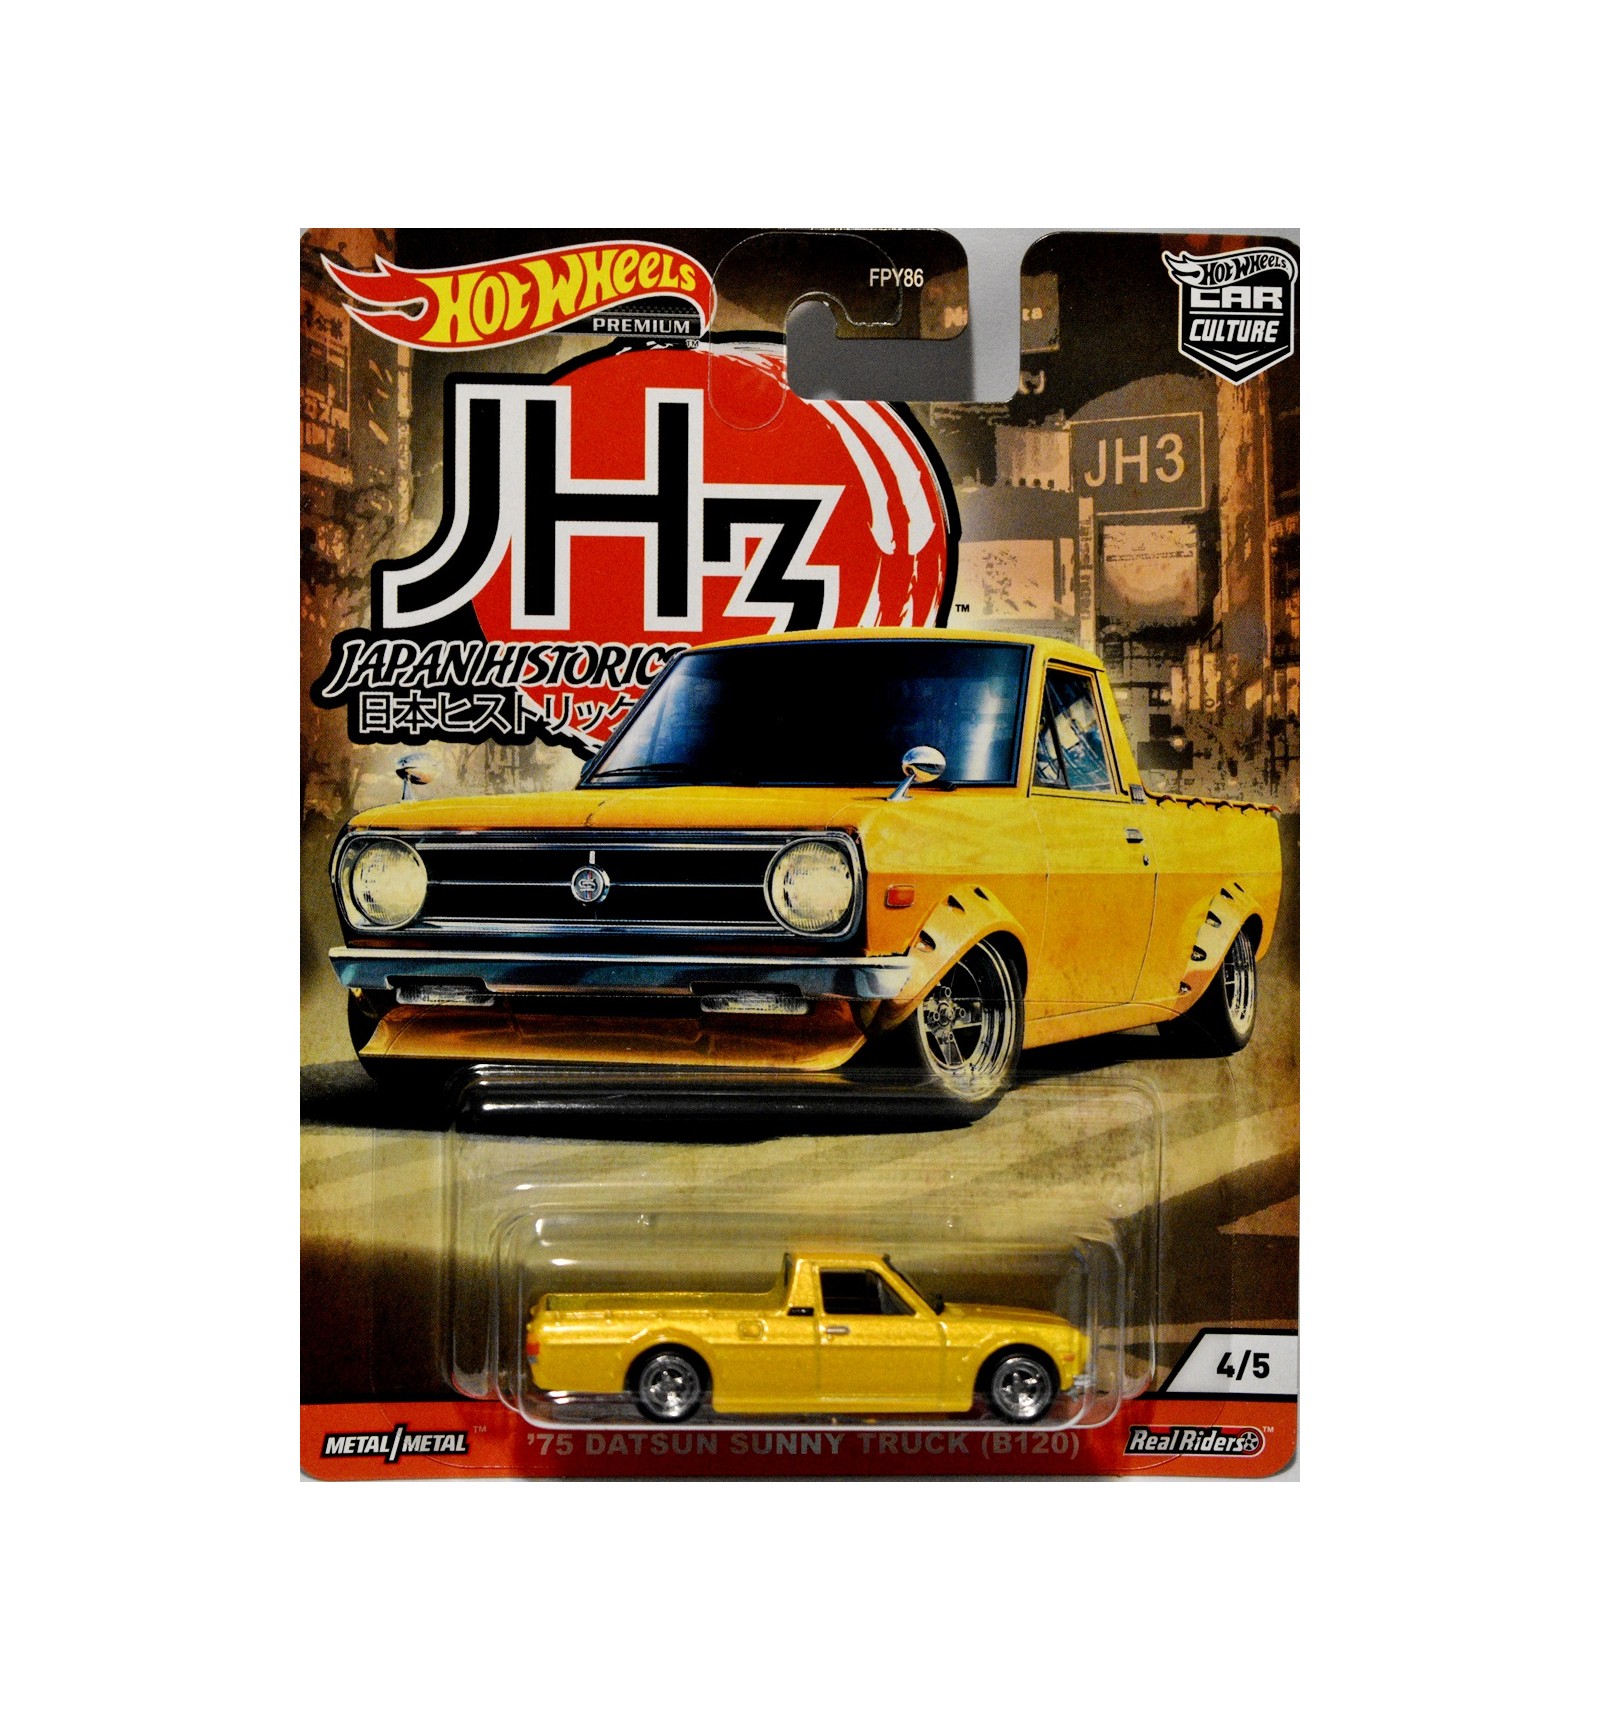 '75 DATSUN SUNNY TRUCK HOT WHEELS-PREMIUM CAR CULTURE-JAPAN HISTORICS 3 B120 